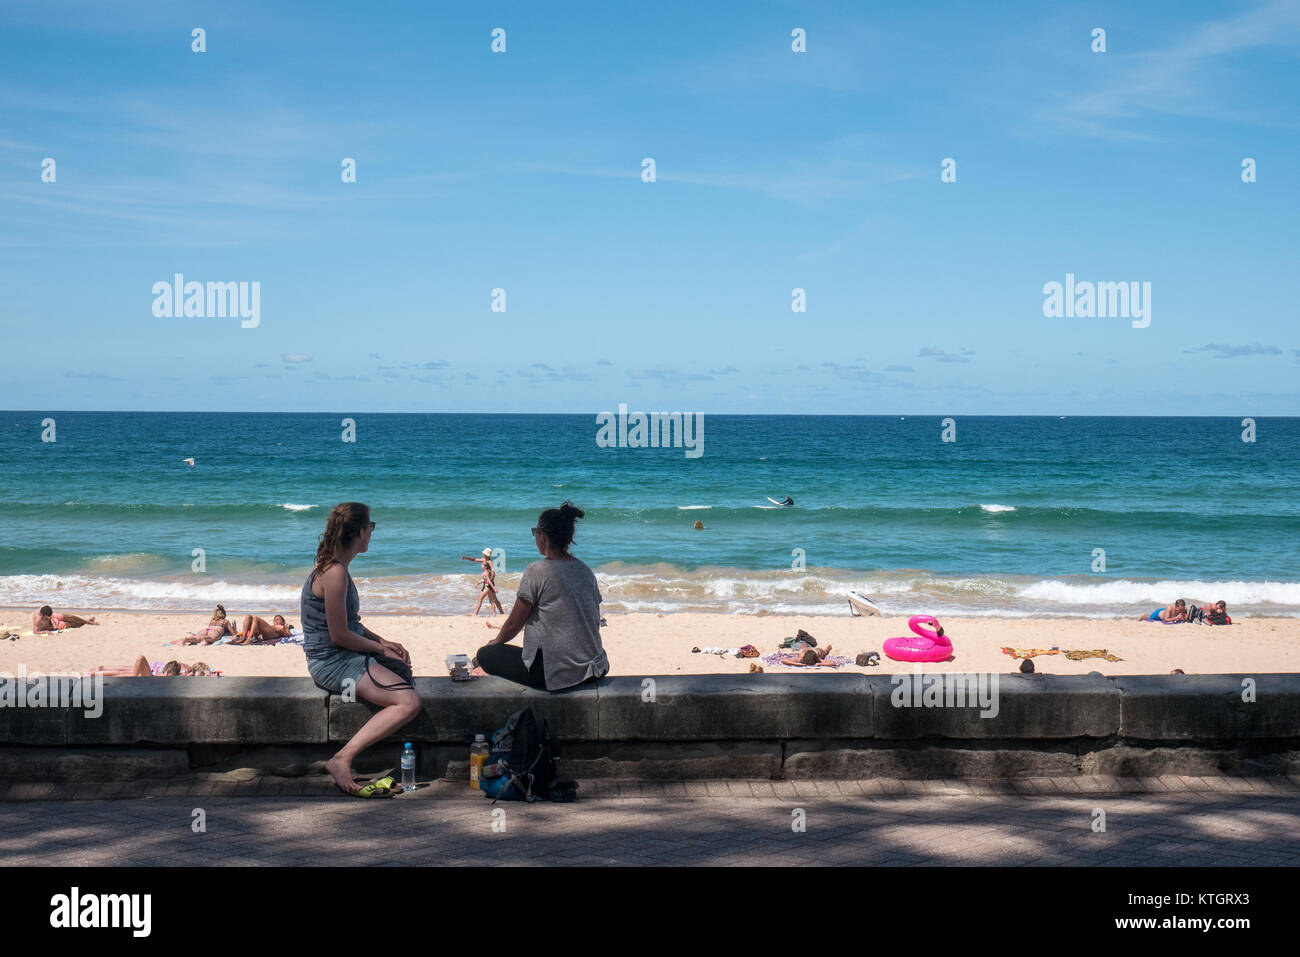 women relaxing on a beach in sydney Stock Photo